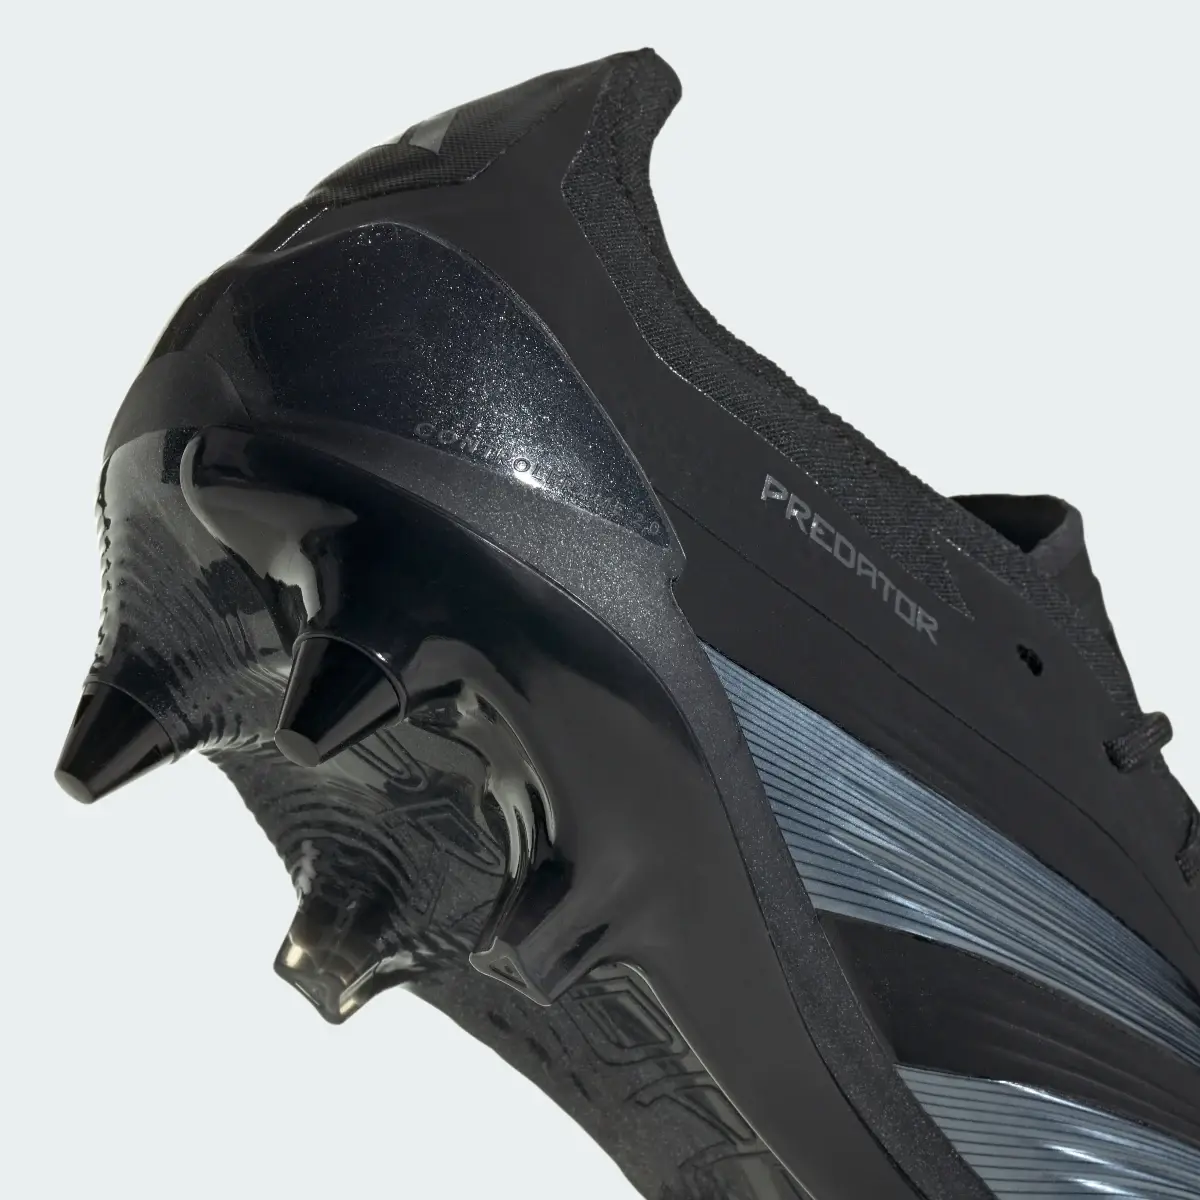 Adidas Predator Elite Soft Ground Football Boots. 3